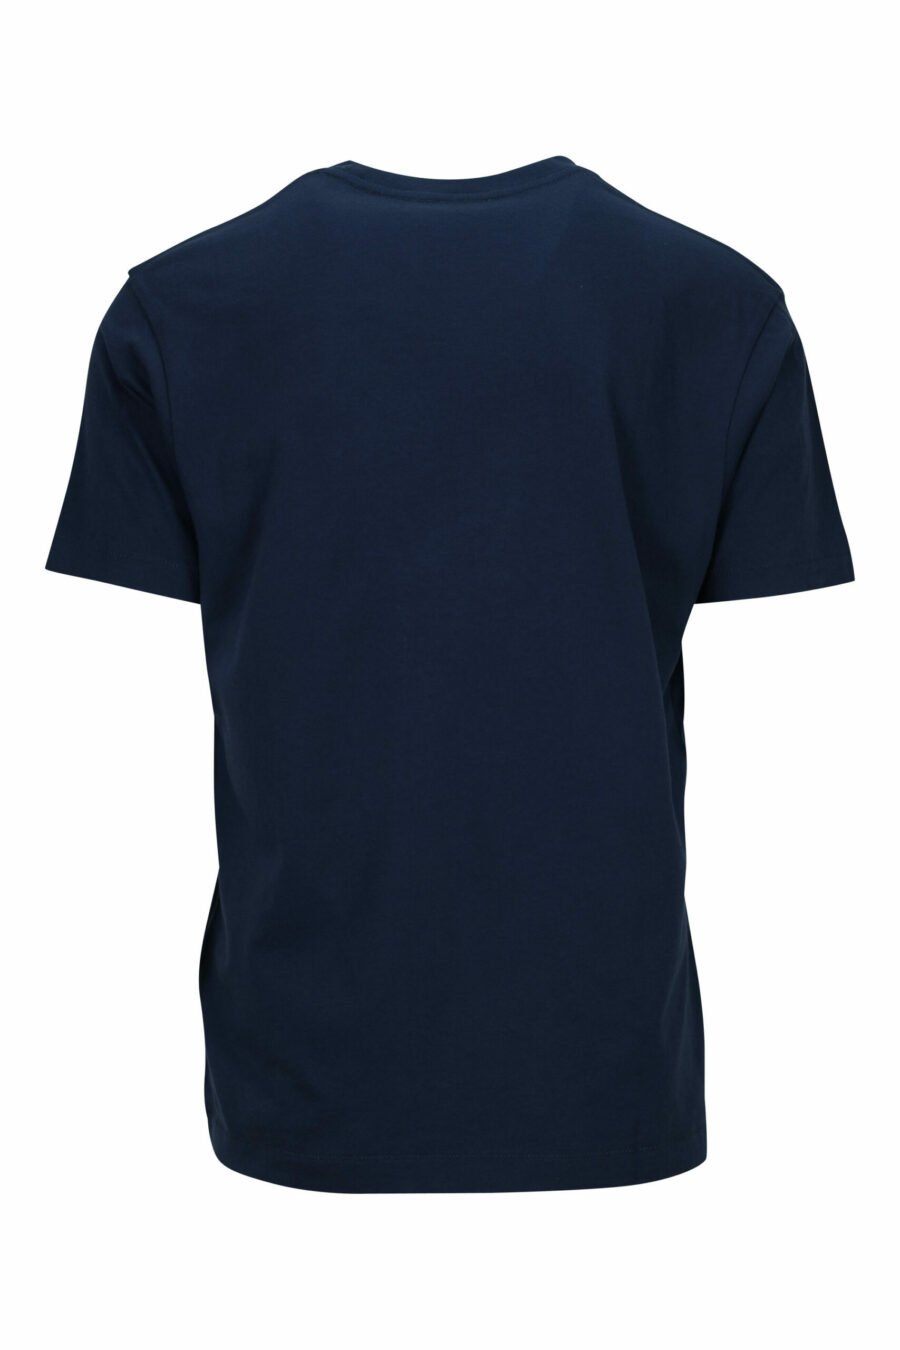 T-shirt bleu avec mini-logo rond "Kenzo" - 3612230544475 1 à l'échelle